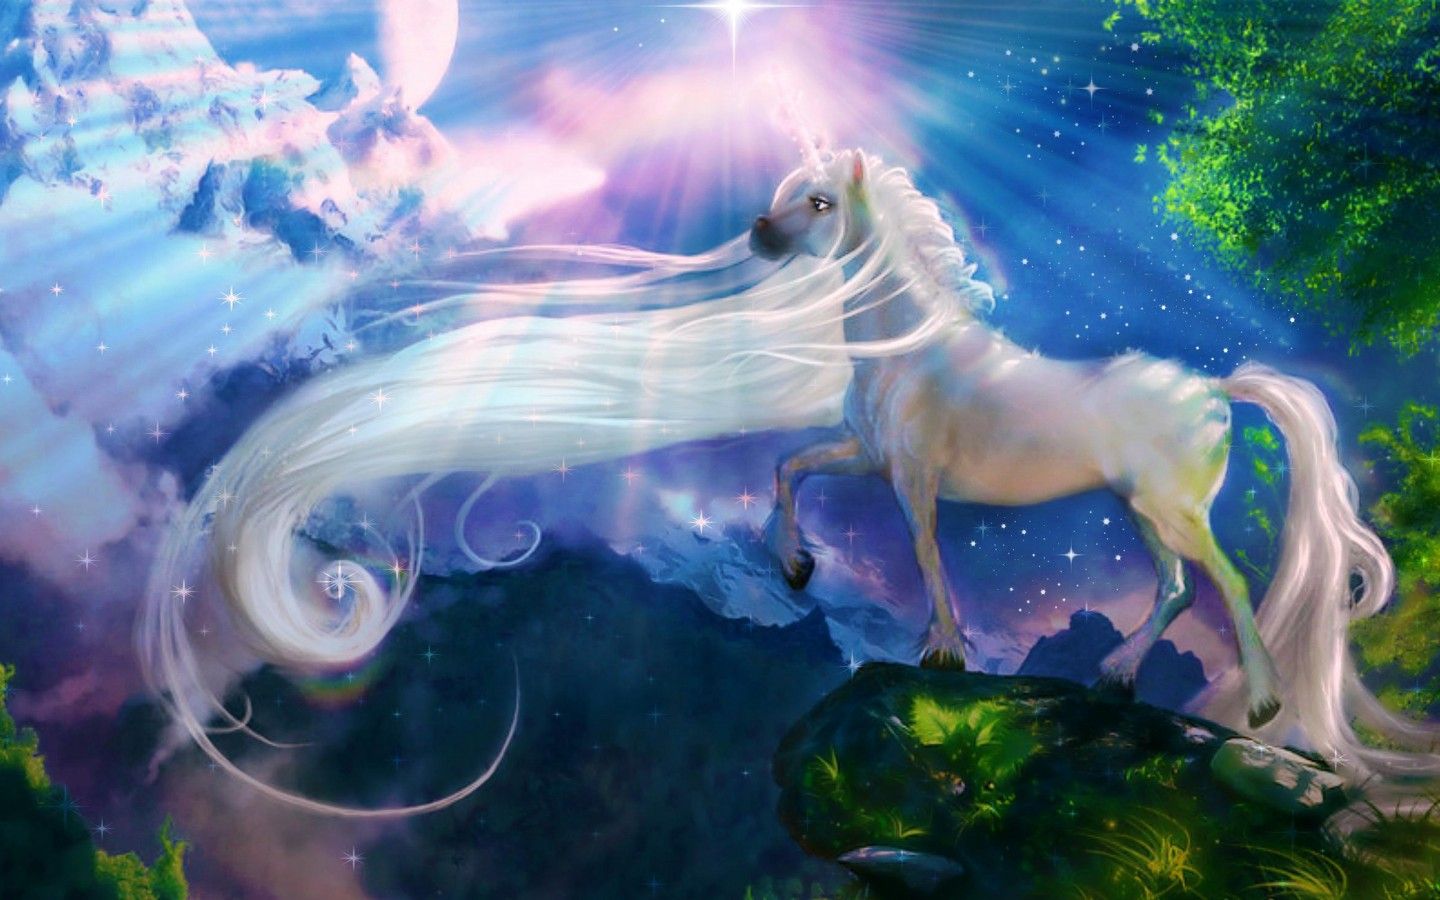 Unicorn HD Desktop Wallpaper. Unicorn wallpaper, Unicorn fantasy, Unicorn background